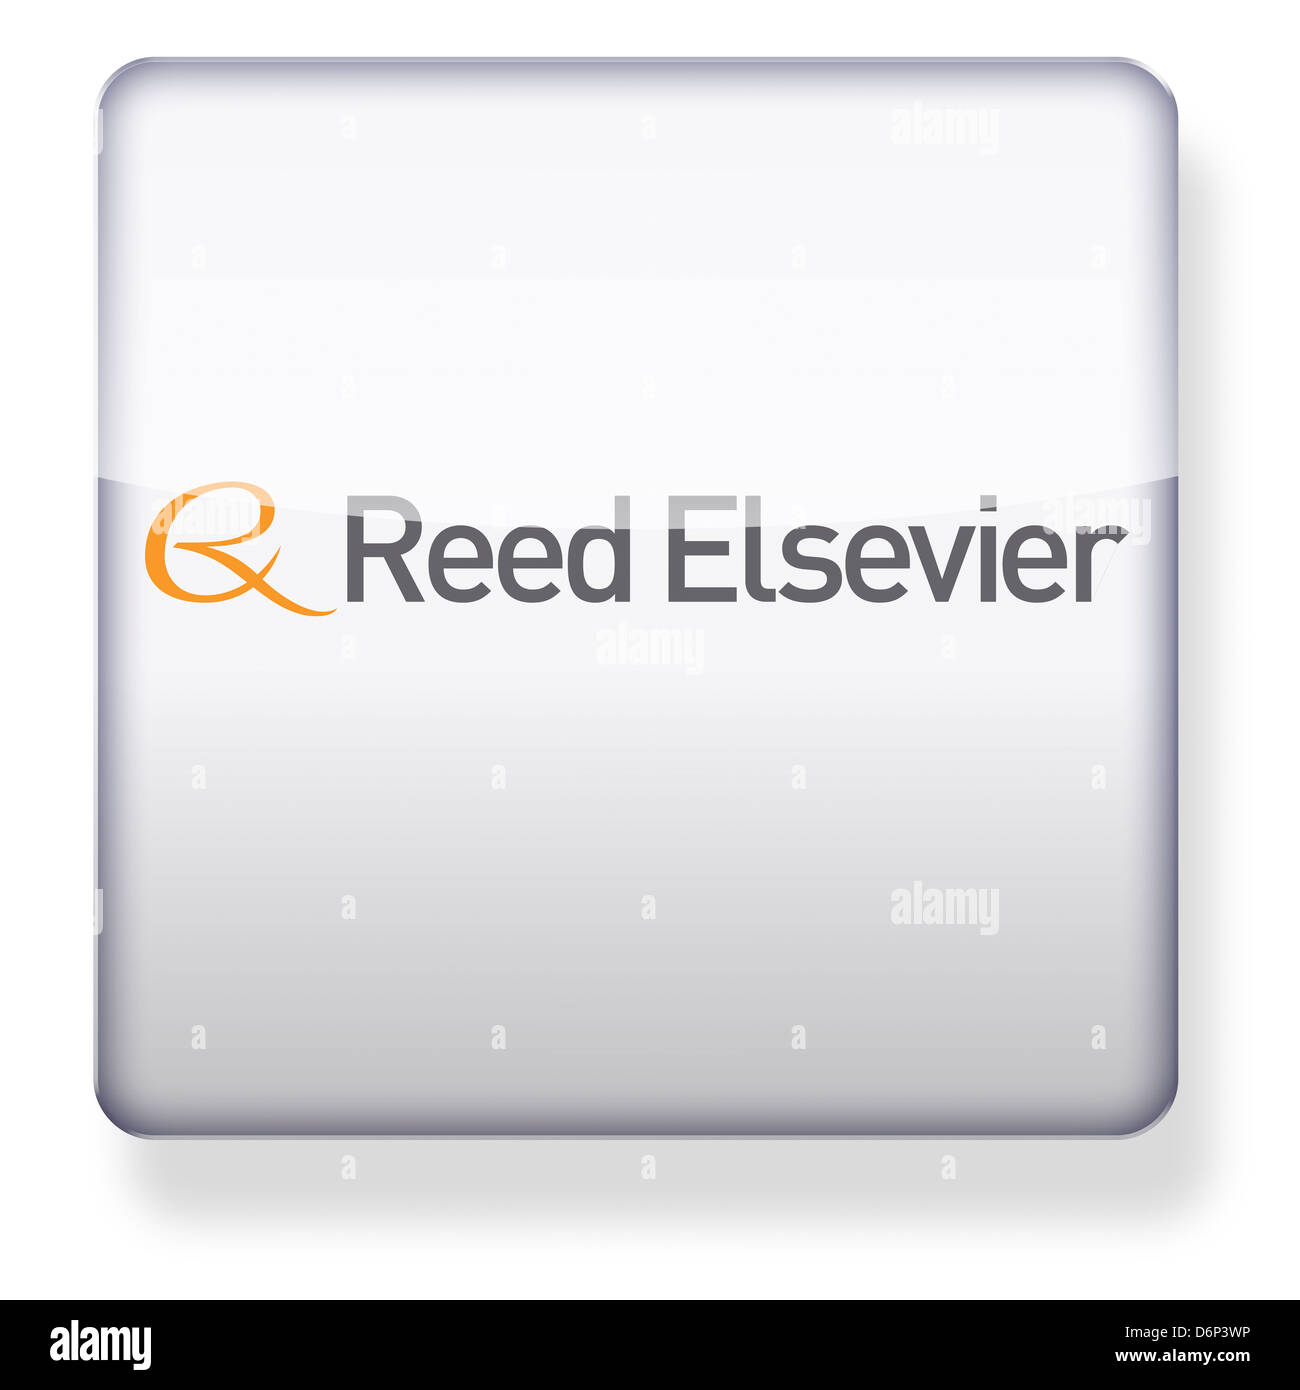 reed elsevier logo